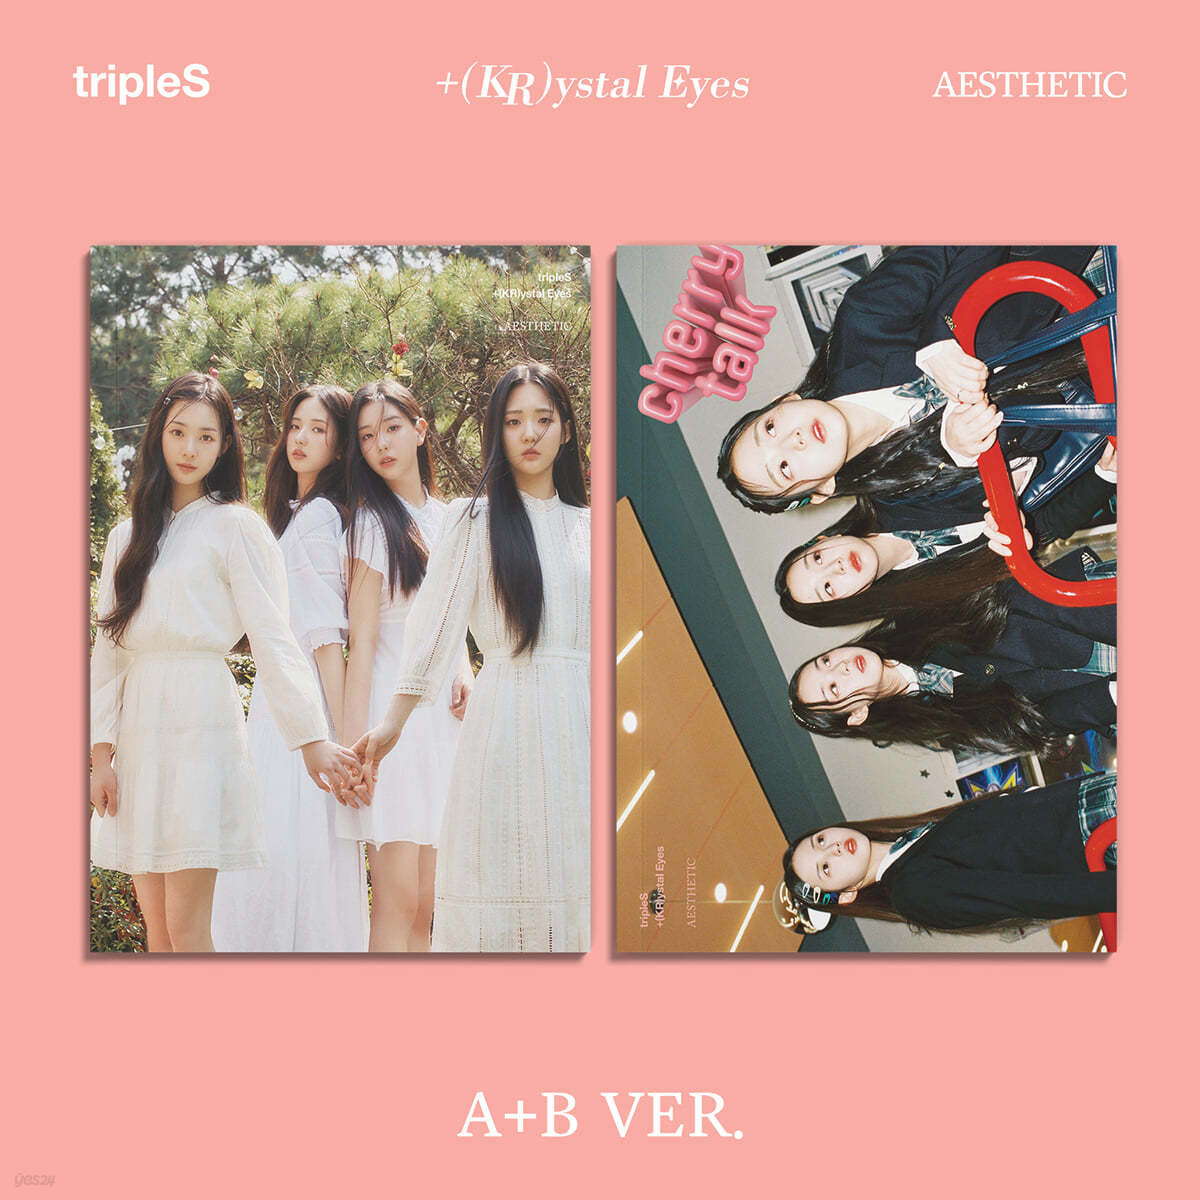 tripleS (트리플에스) - 미니앨범 : +(KR)ystal Eyes [AESTHETIC][2종 SET]